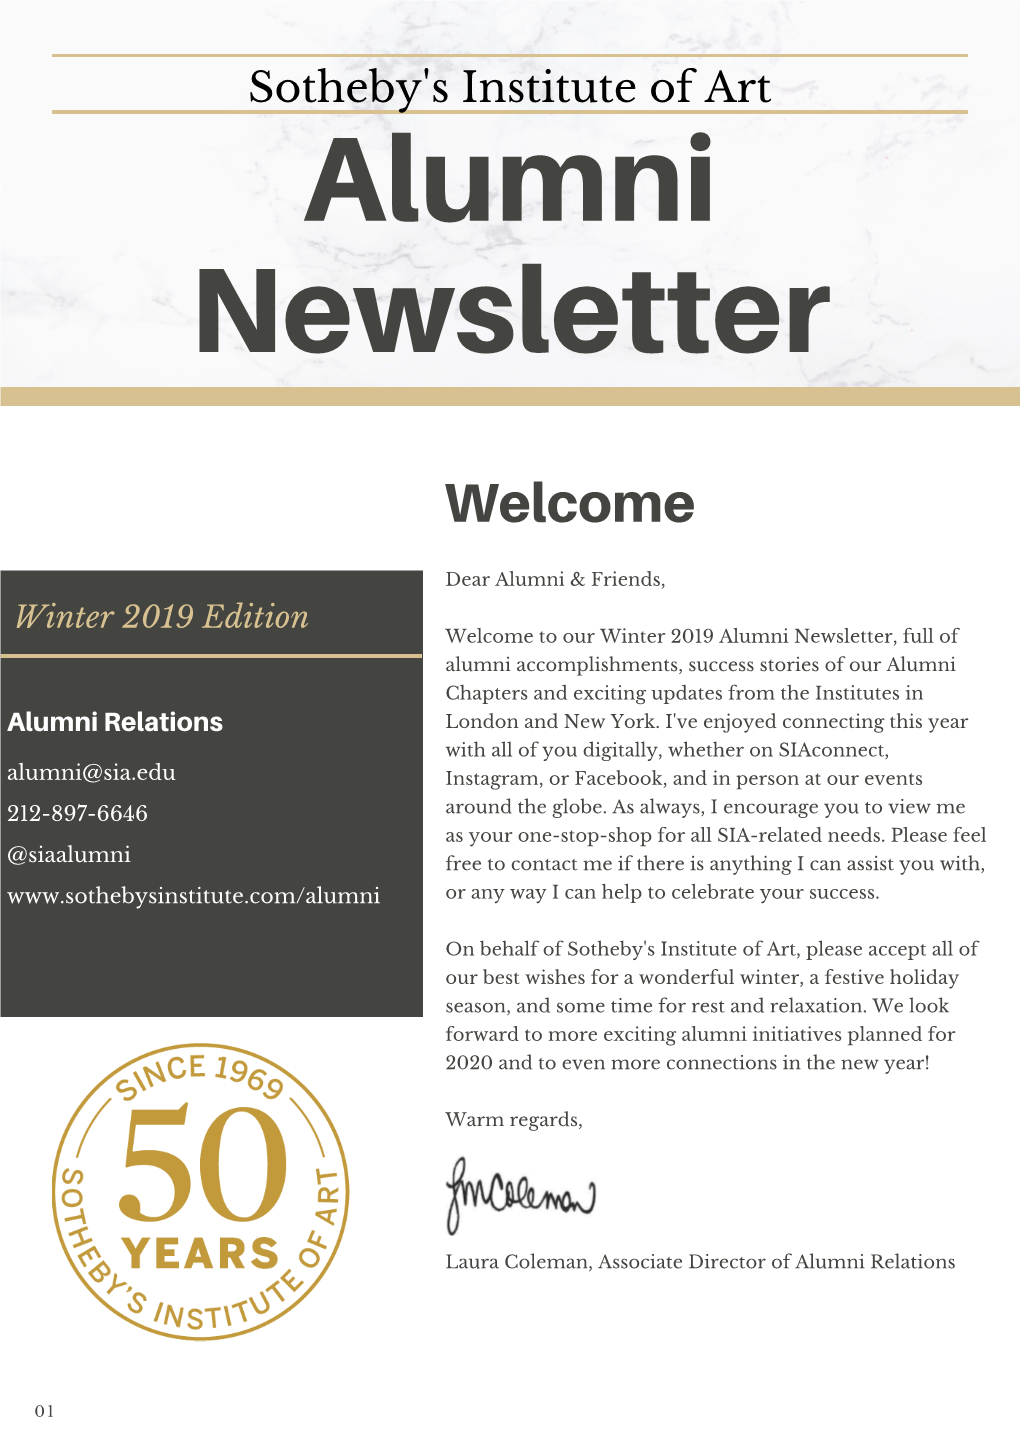 Alumni Newsletter Winter 2019